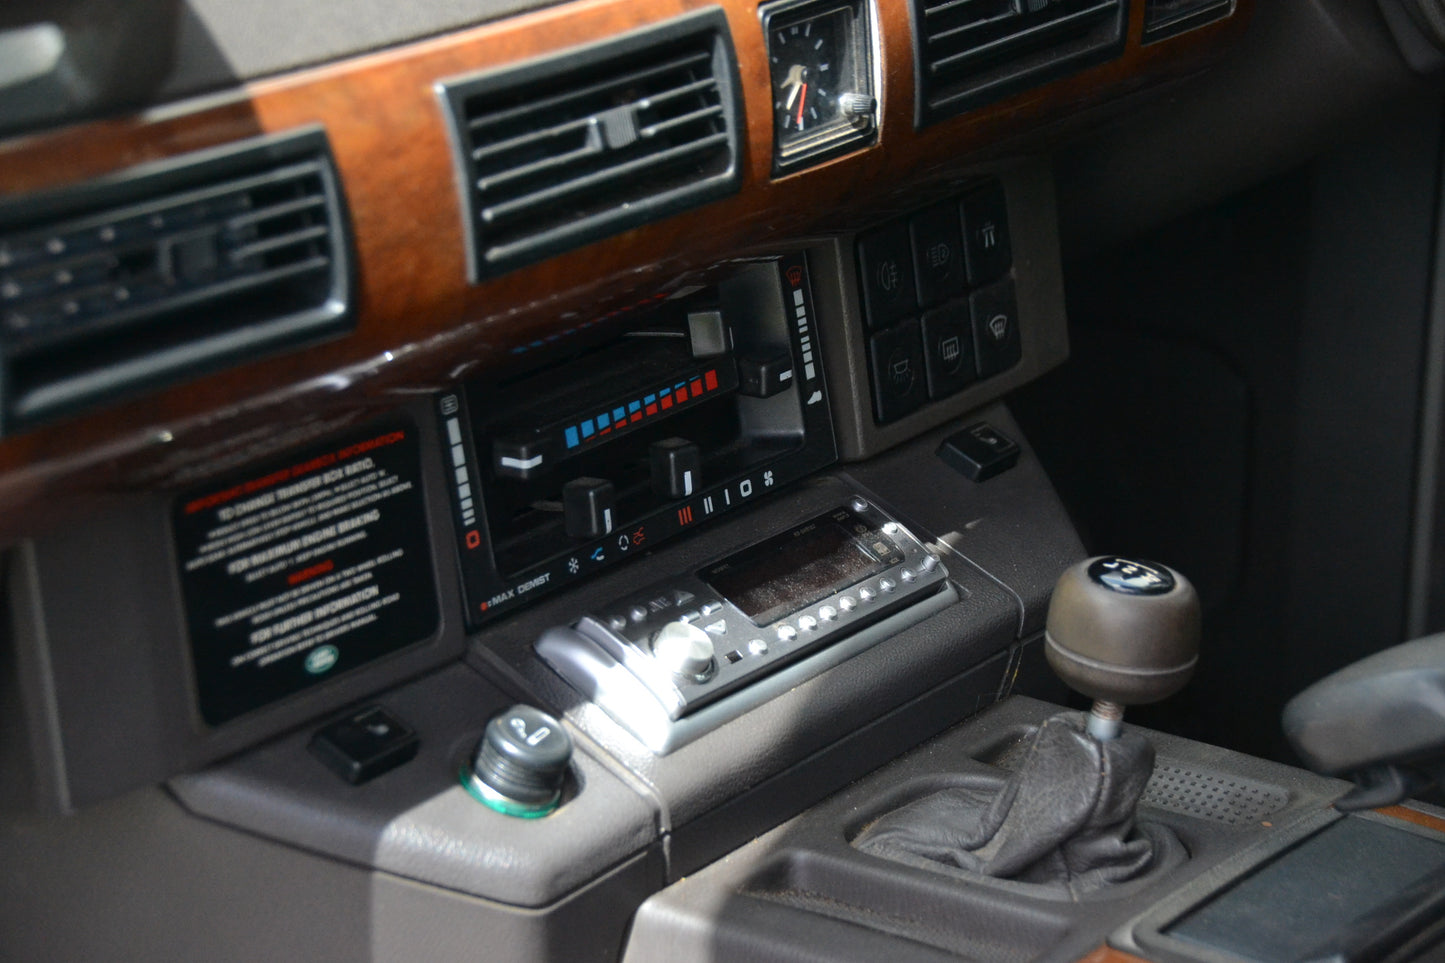 SOLD 1992 Range Rover classic Vogue 3.9 efi Auto (restoration project)